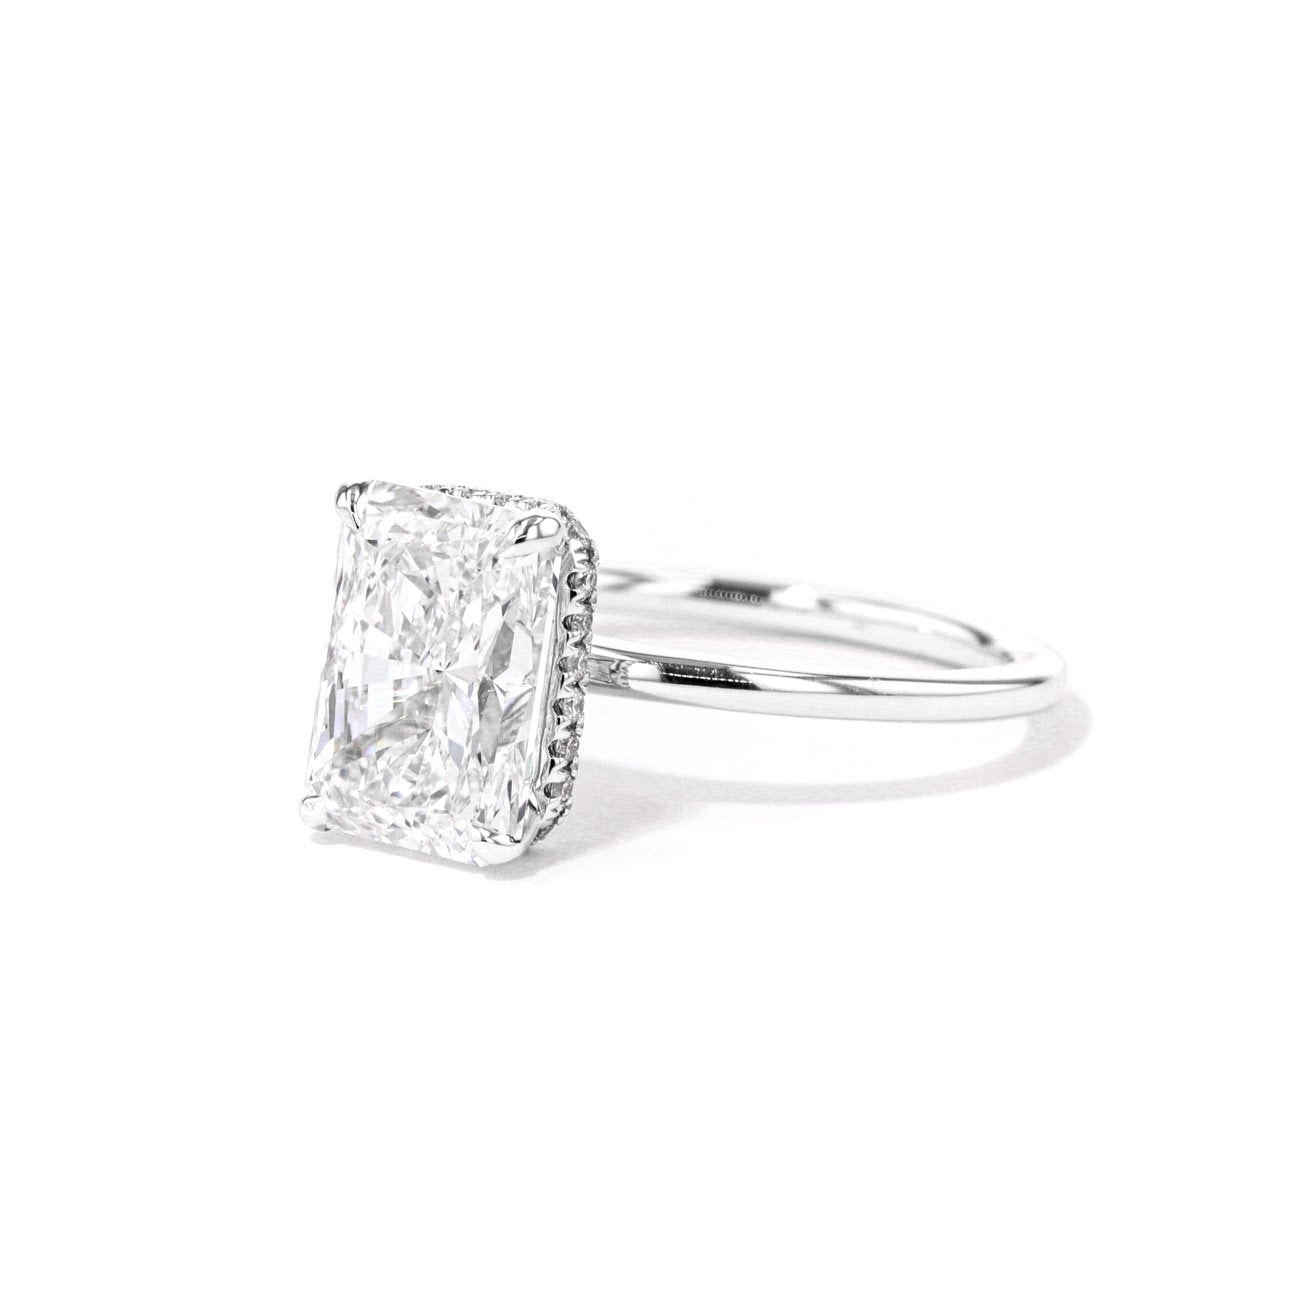 1.6mm Stephanie Radiant High Polish Engagement Rings Princess Bride Diamonds 